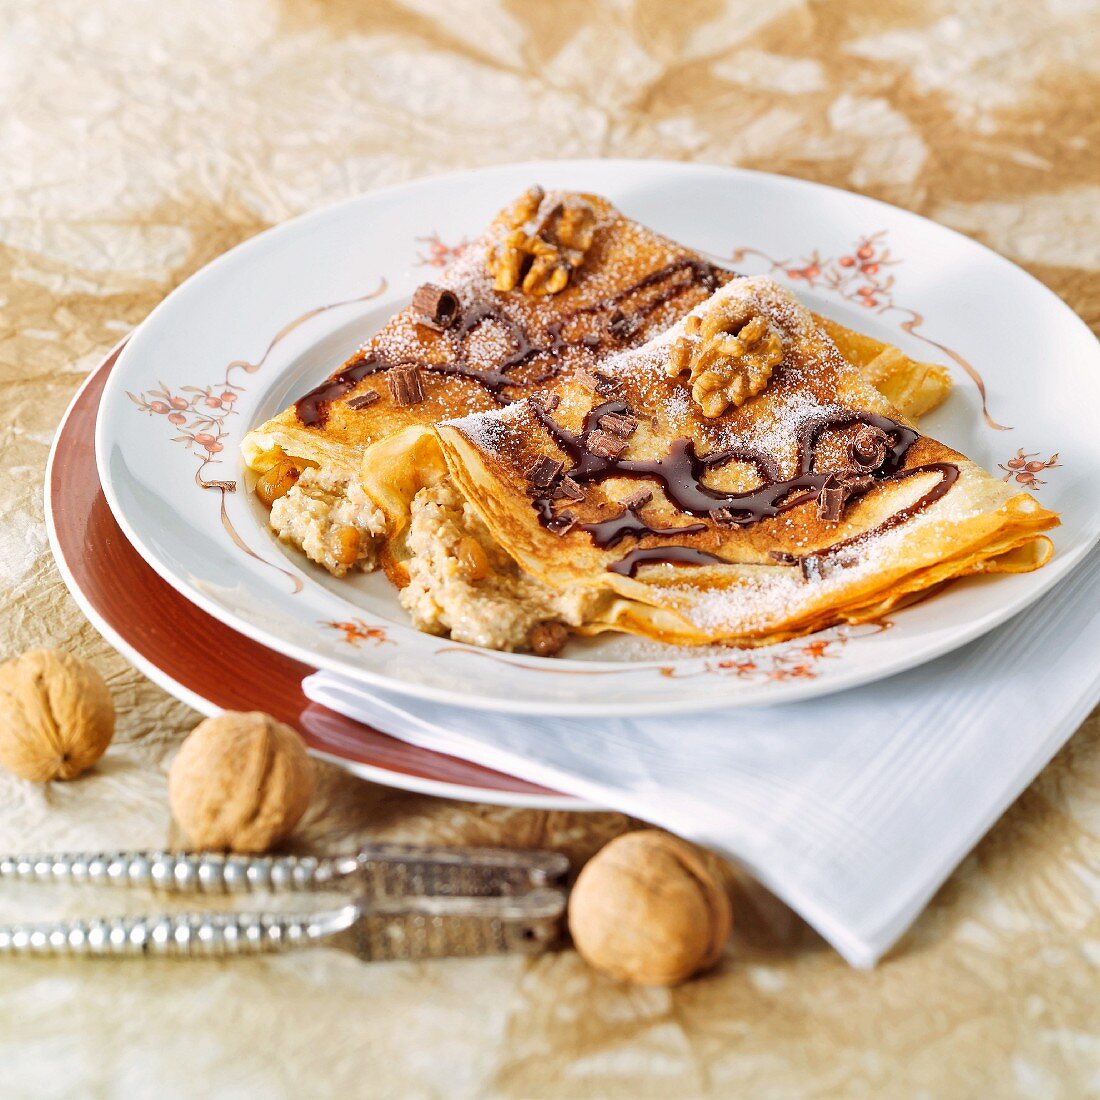 Hungarian pancake dish with walnuts (Gundel palacsinta)